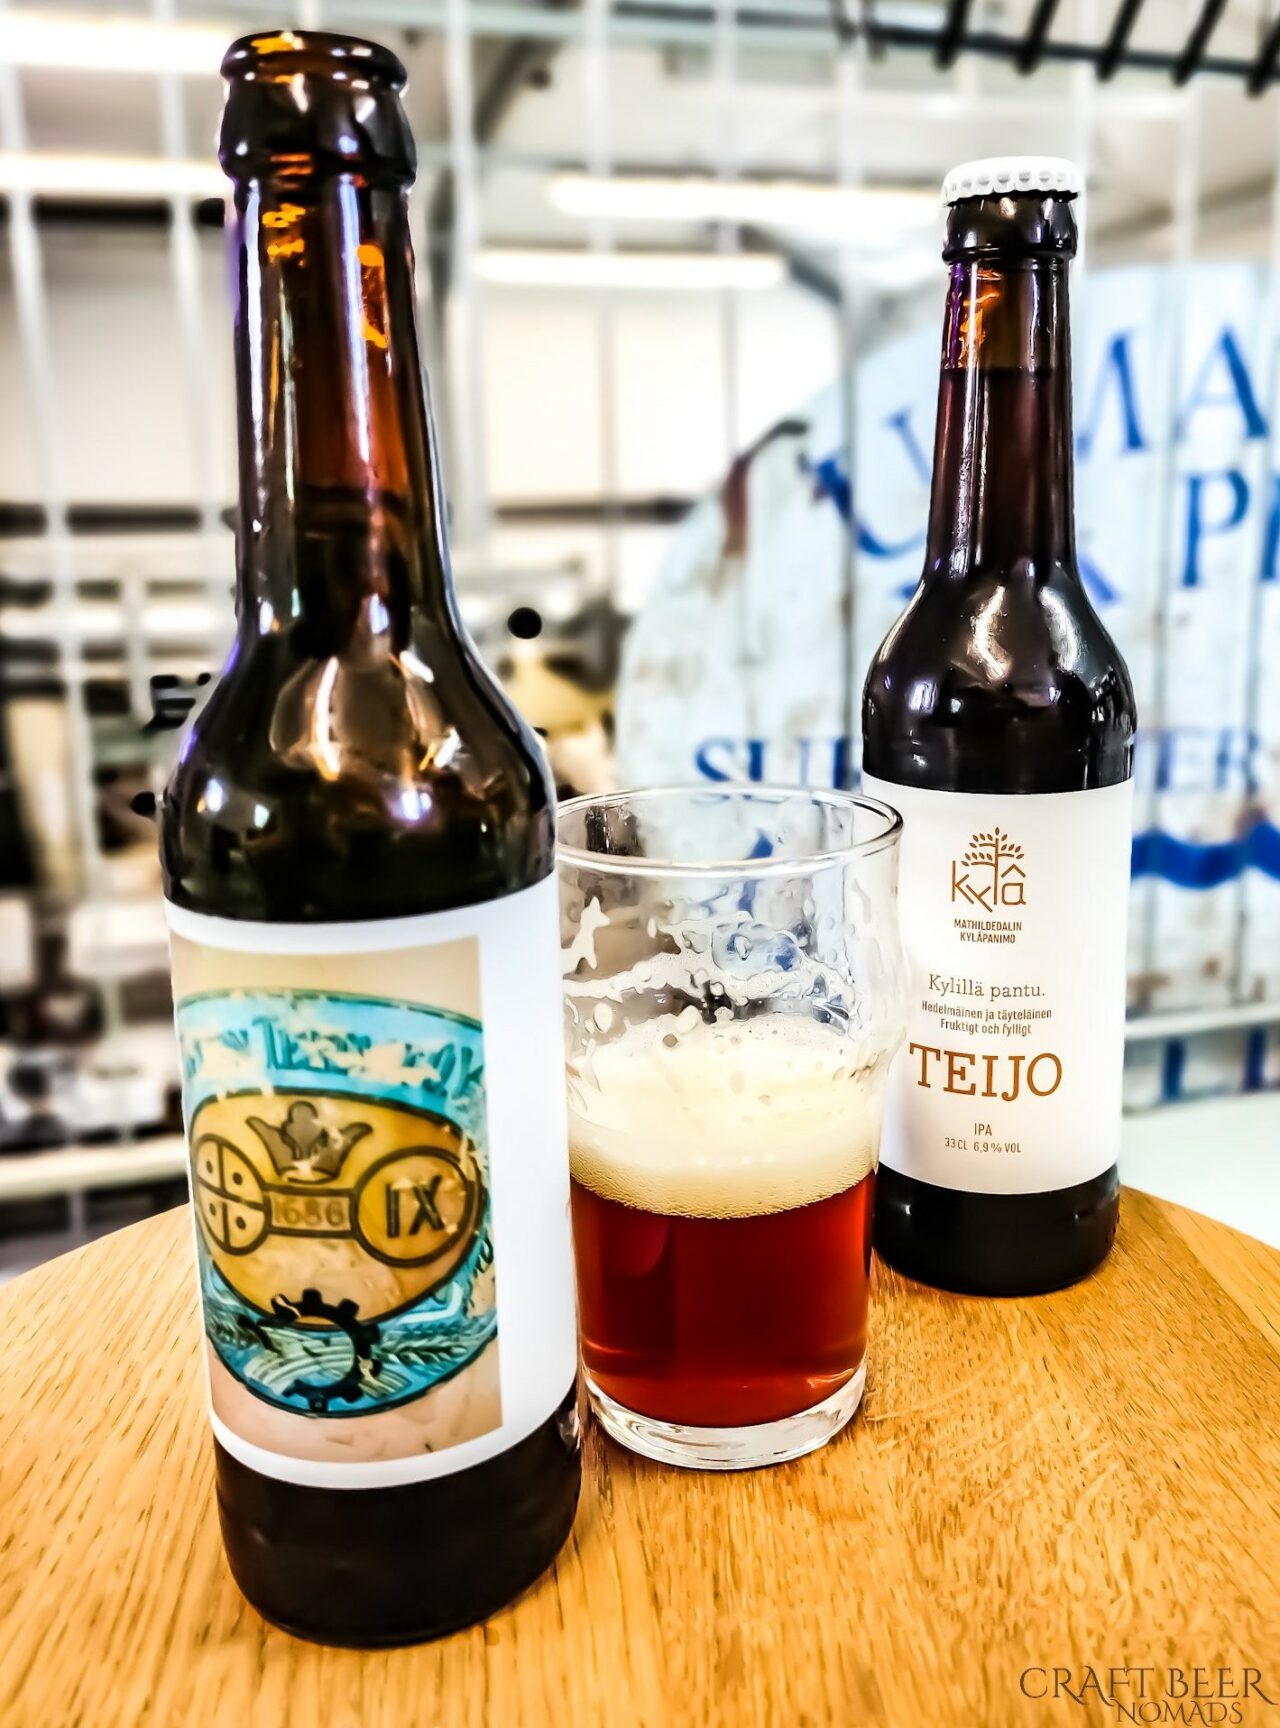 Teijo IPA | Mathildedalin Kyläpanimo brewery, Finland | Craft Beer Nomads